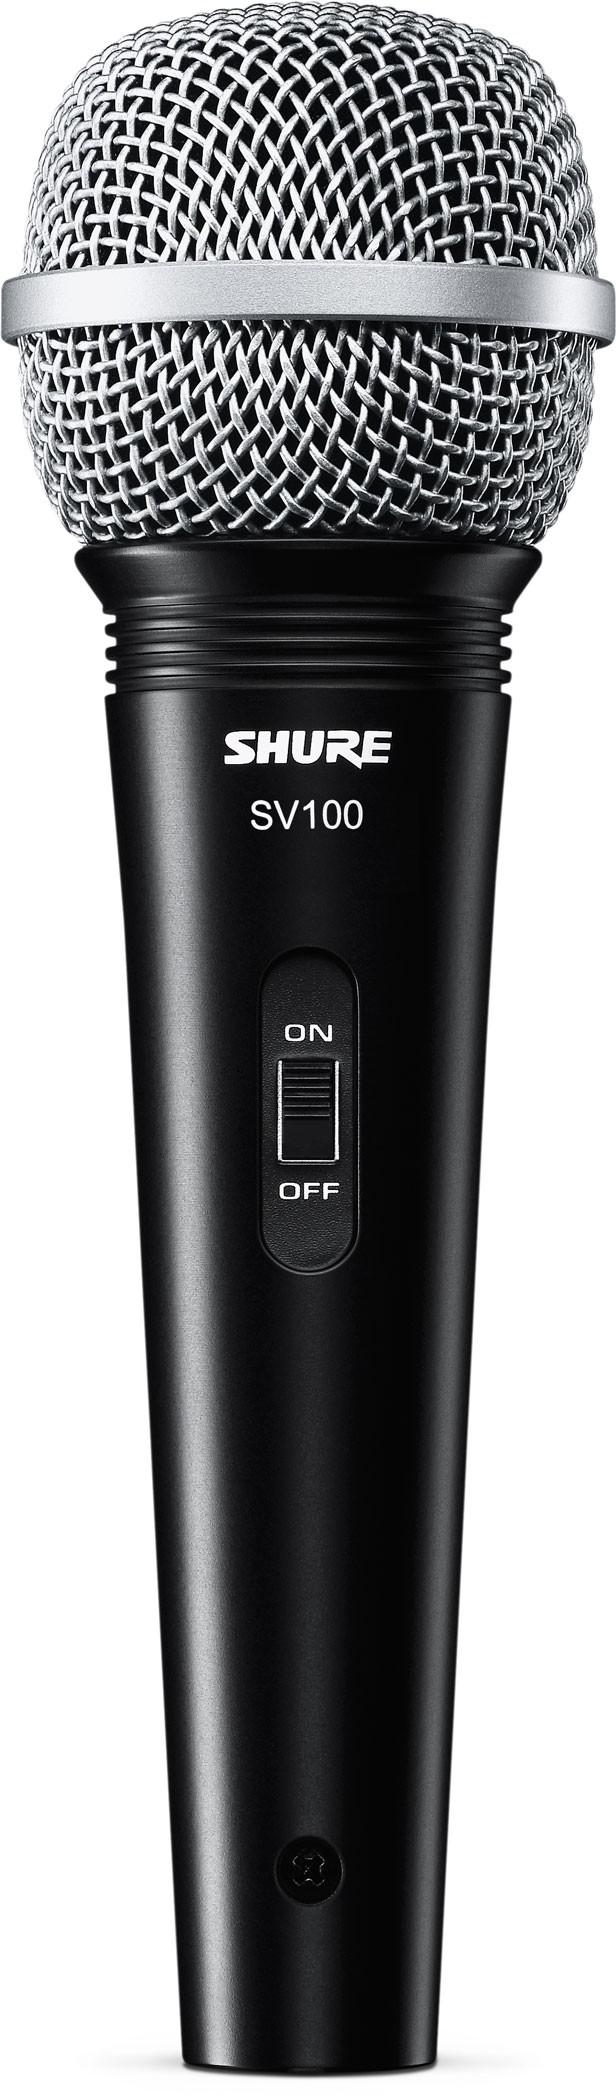 Shure - Micrófono de Mano Mod.SV100_27